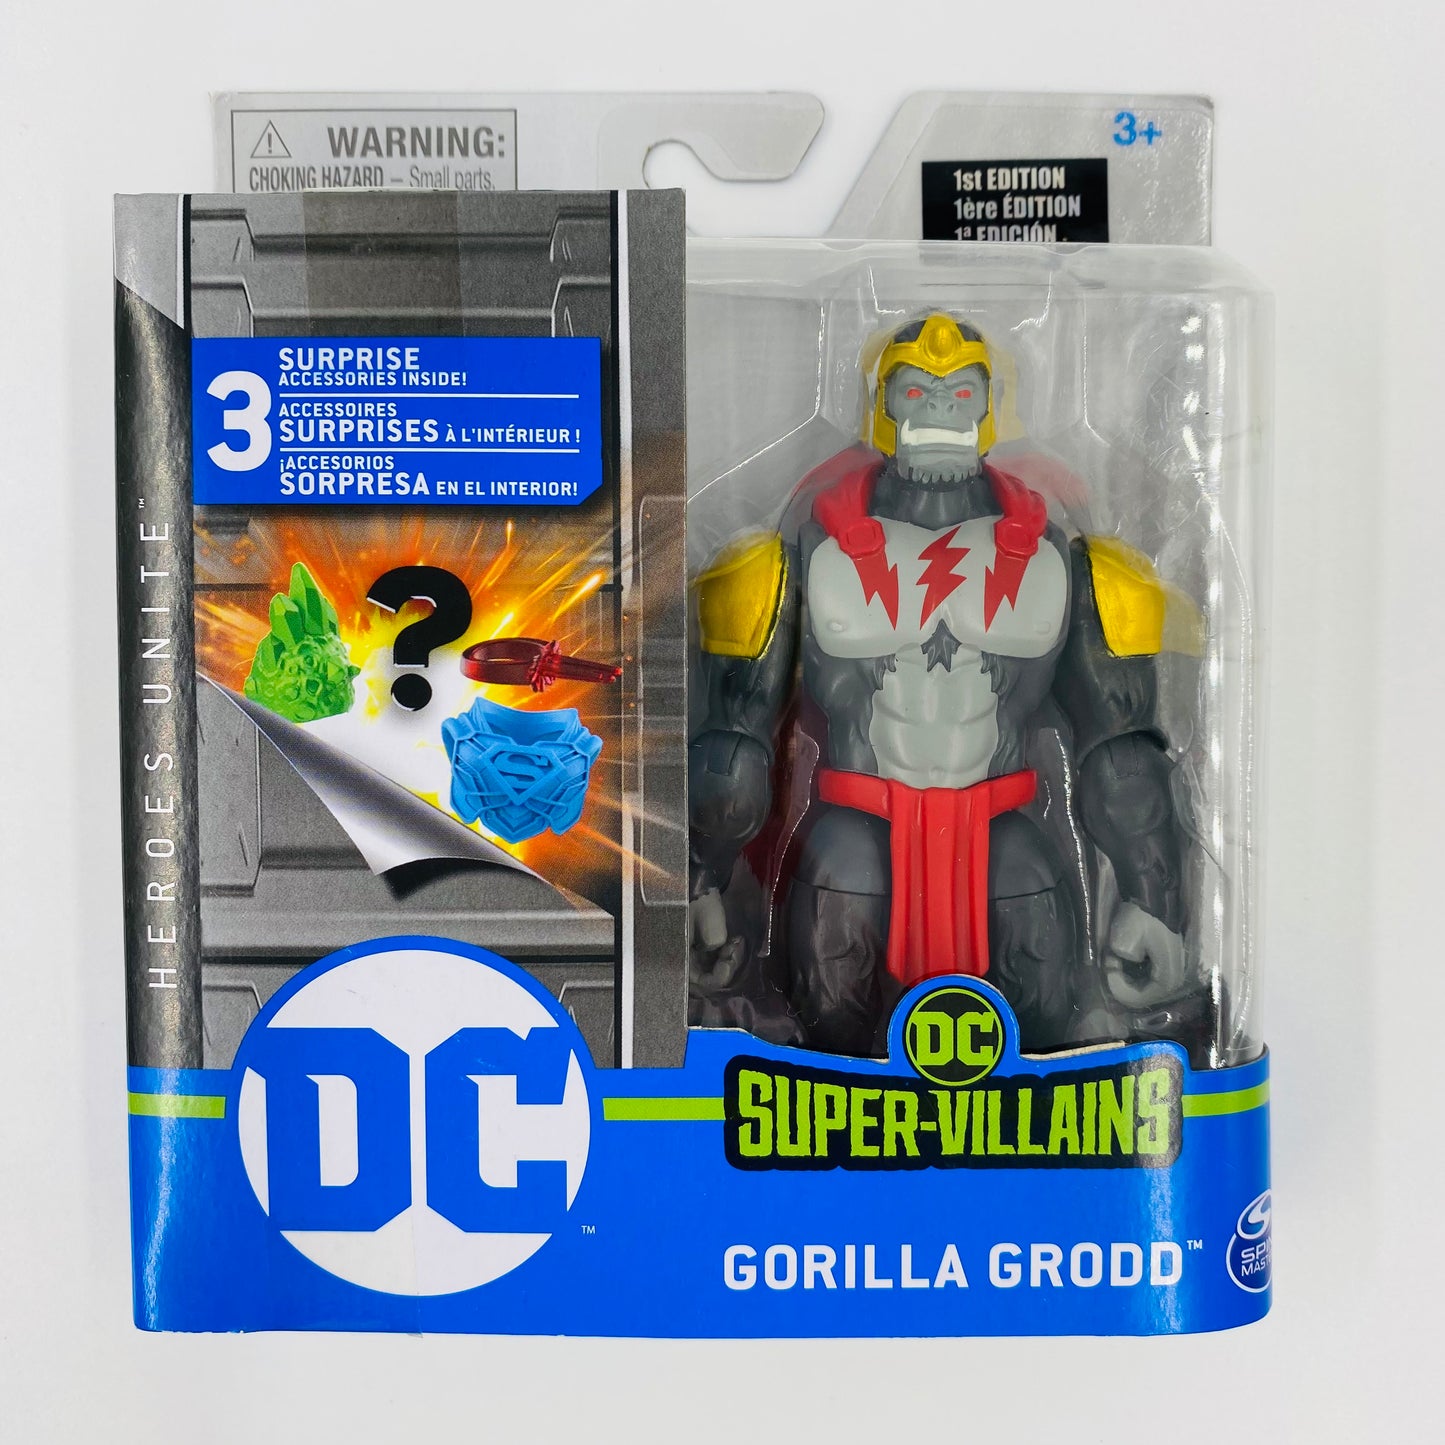 DC Heroes Unite DC Super Villains Gorilla Grodd carded 4” action figure (2020) Spin Master